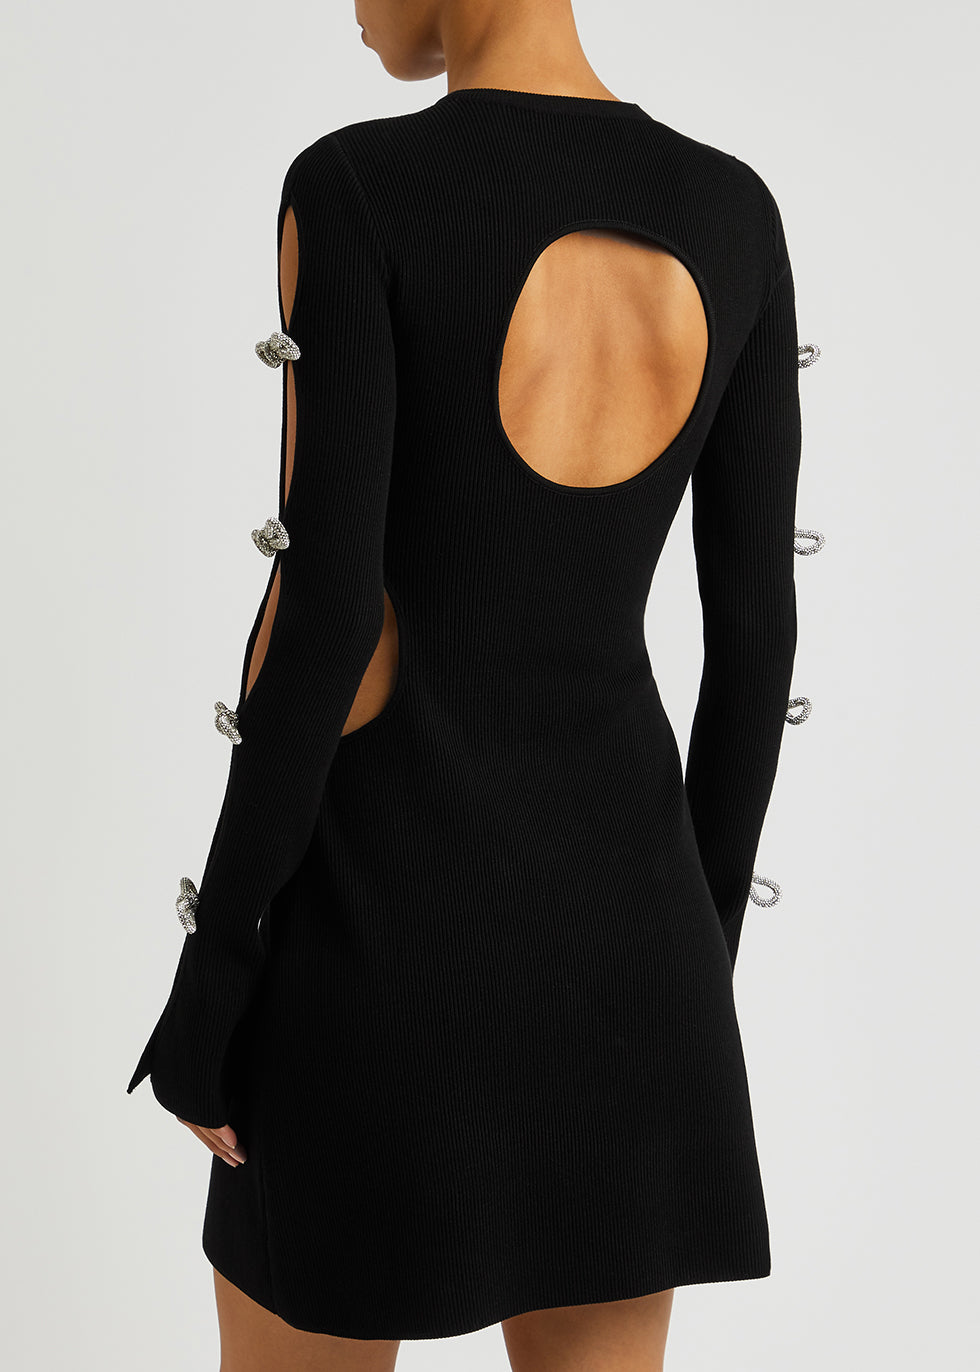 Women's Fashion Hollowed-out Long Sleeve Bowknot Slim Dress Aclosy